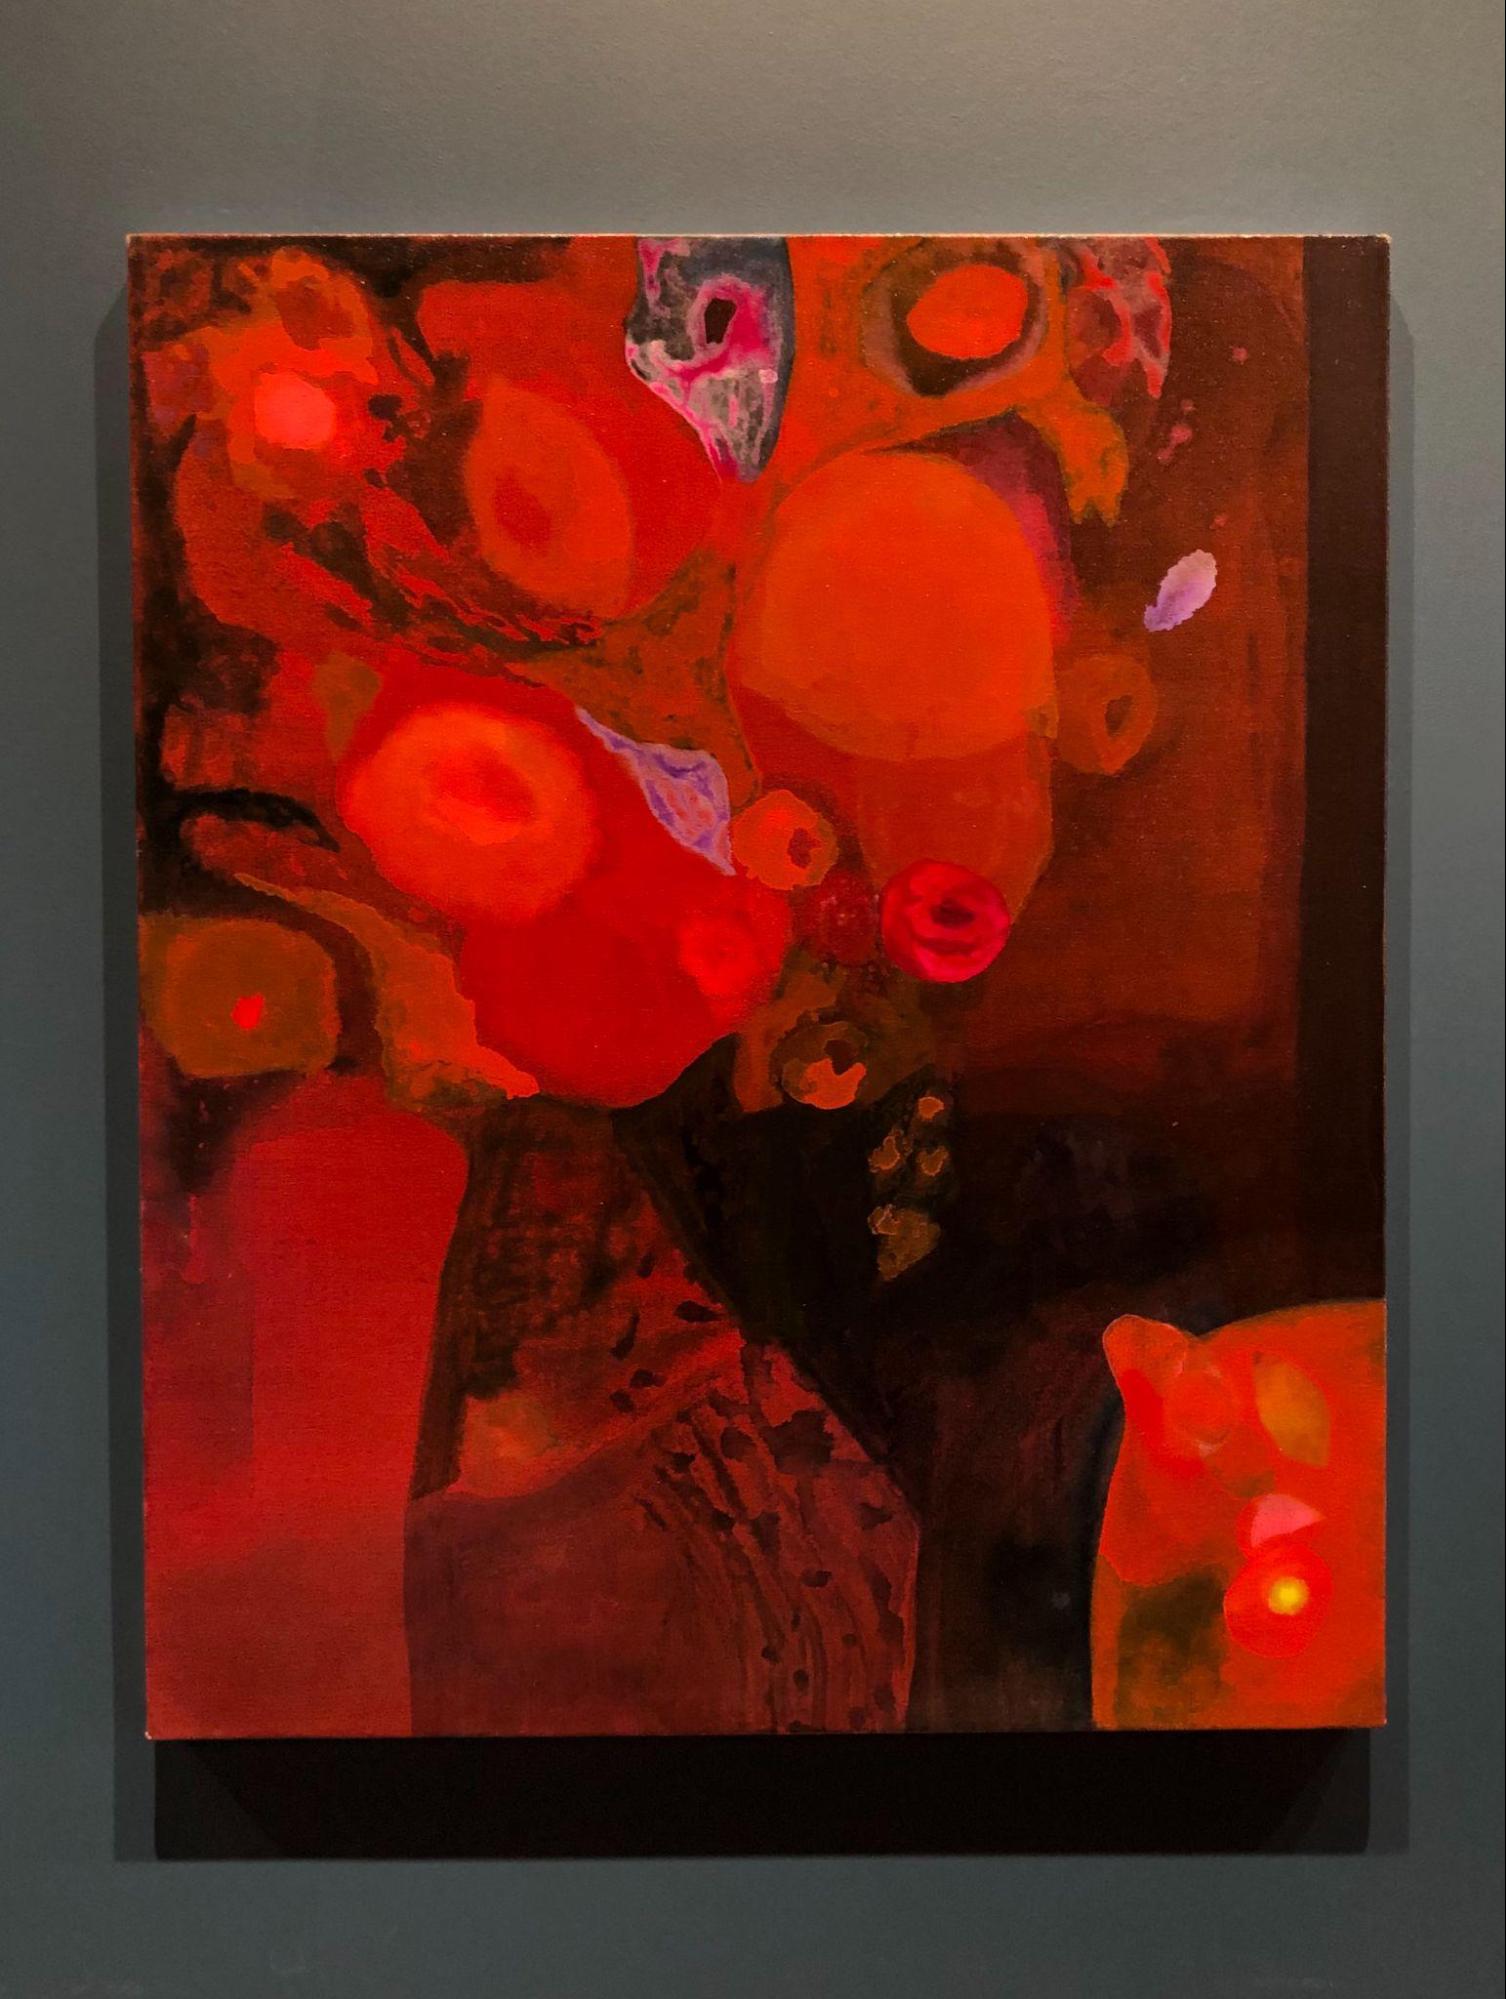 Spirito Rosso, Acrylic on canvas, 36” x 30”, 2021